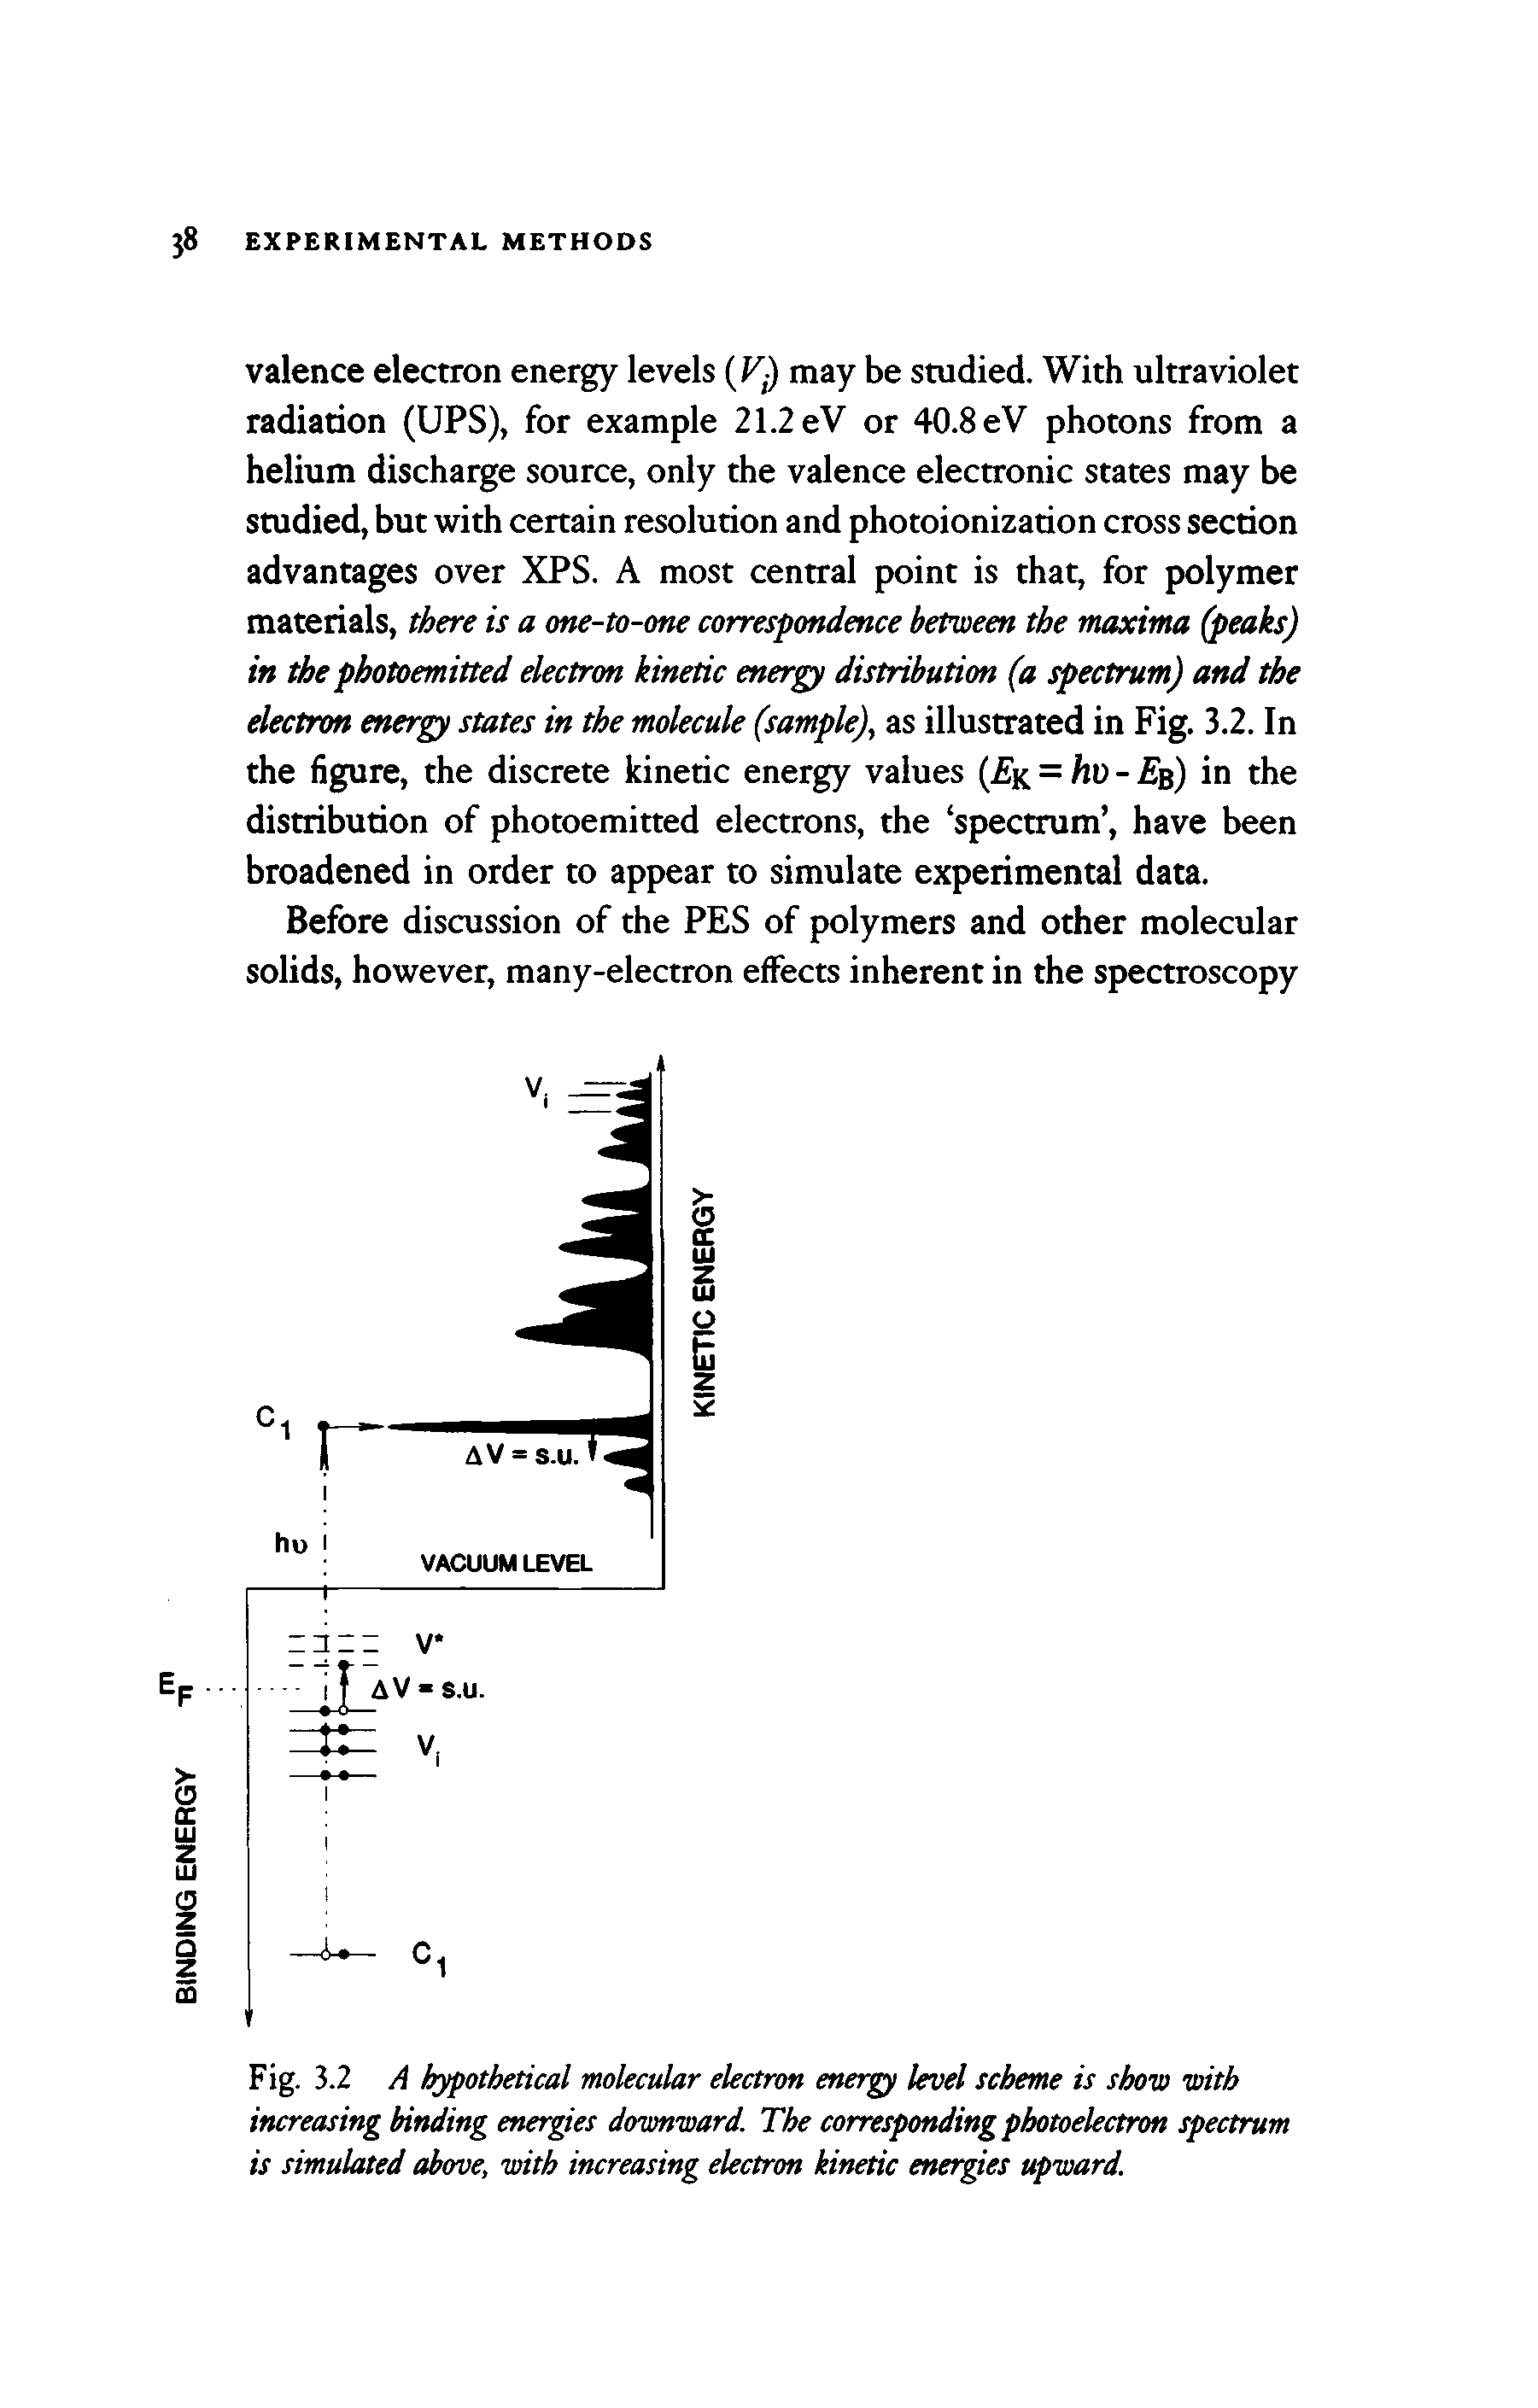 Fig. 3.2 A hypothetical molecular electron energy level scheme is show with increasing binding energies downward. The corresponding photoelectron spectrum is simulated above, with increasing electron kinetic energies upward.